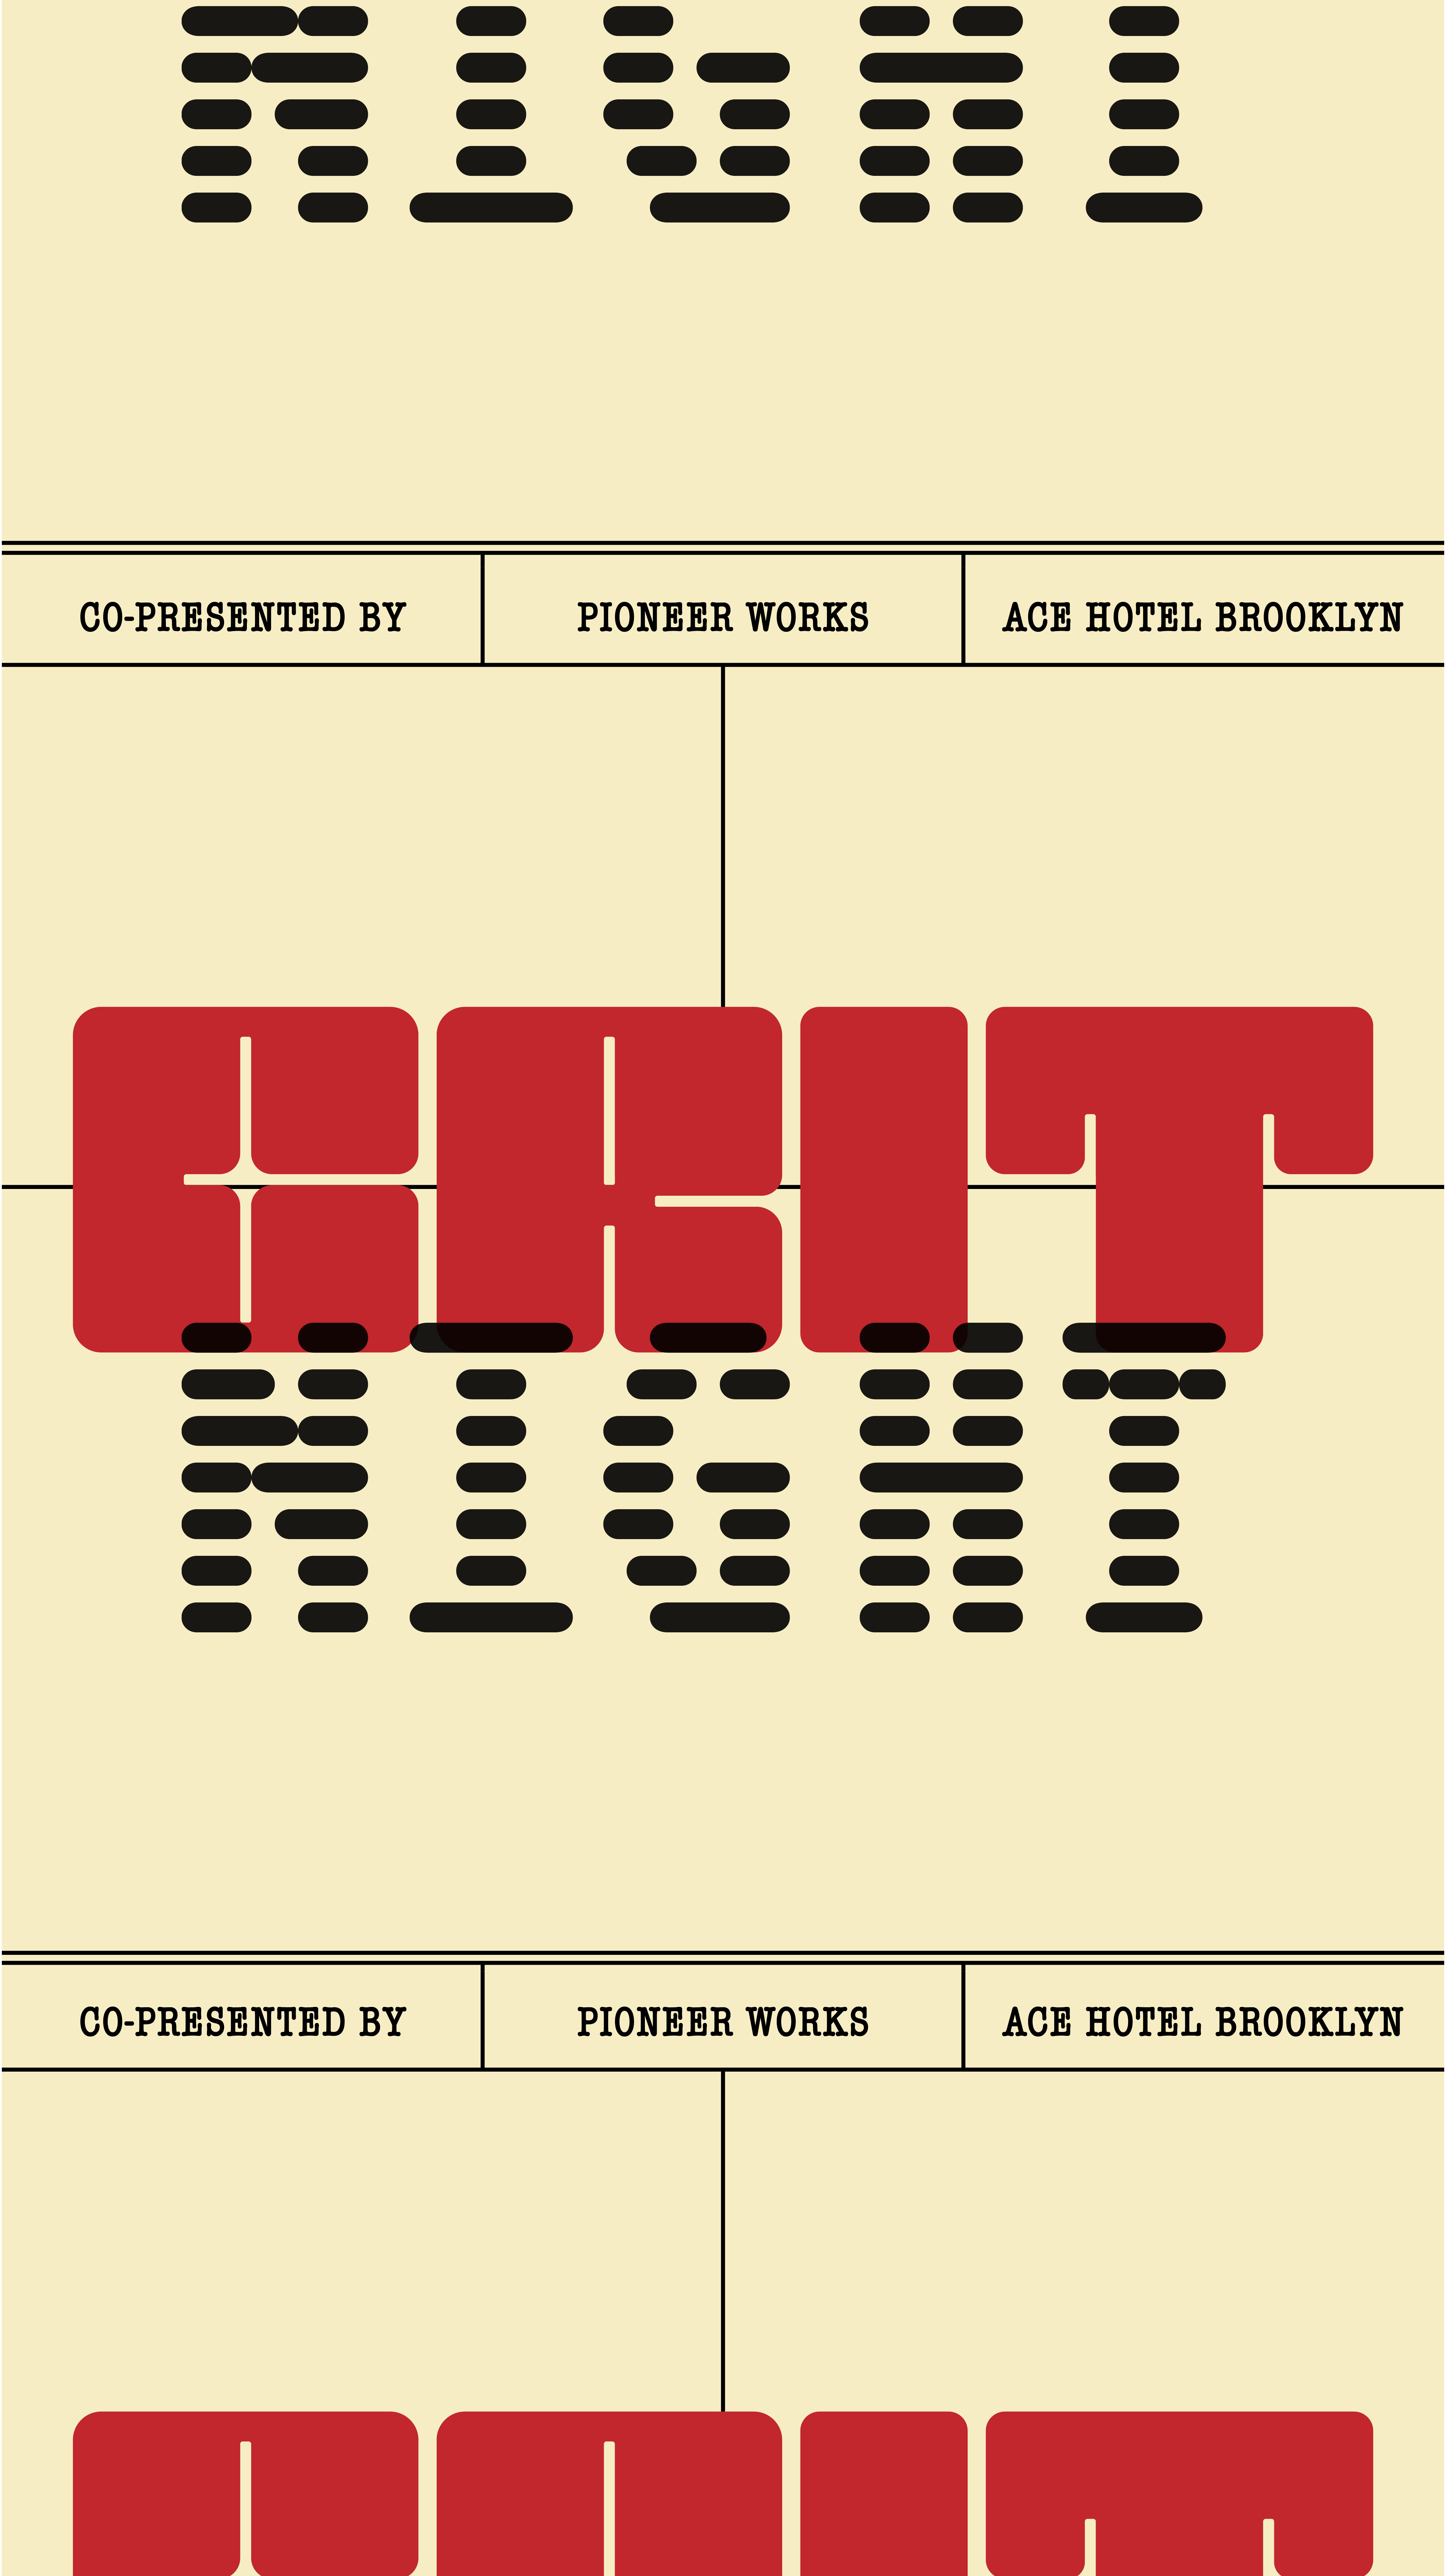 Crit Night event flyer